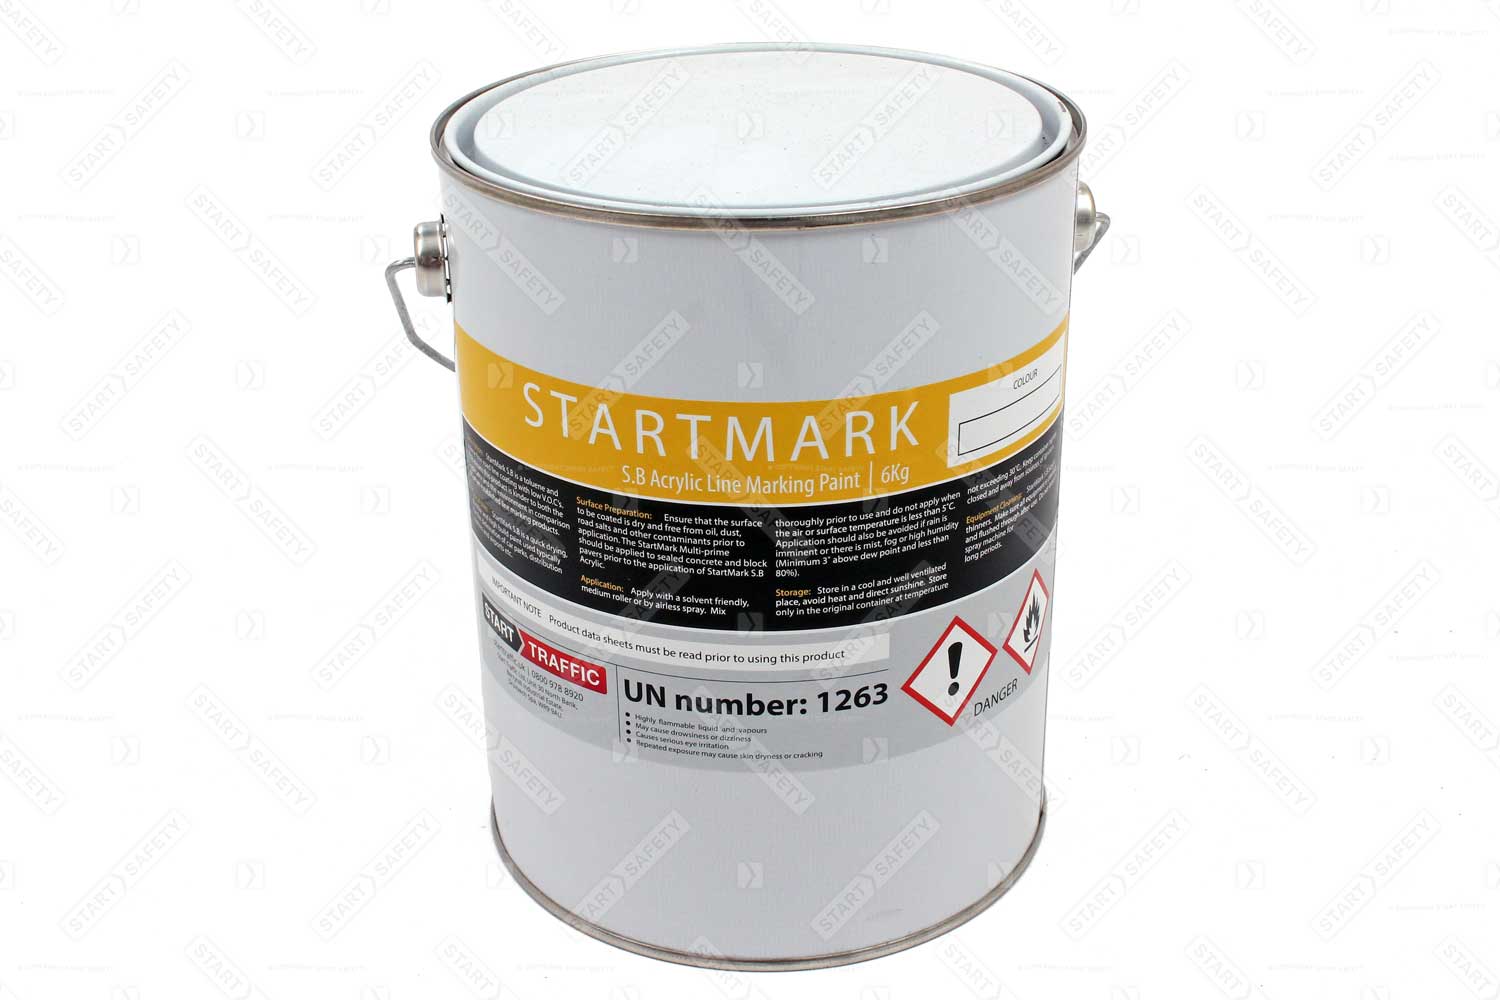 Tub of Startmark Road Marking Paint